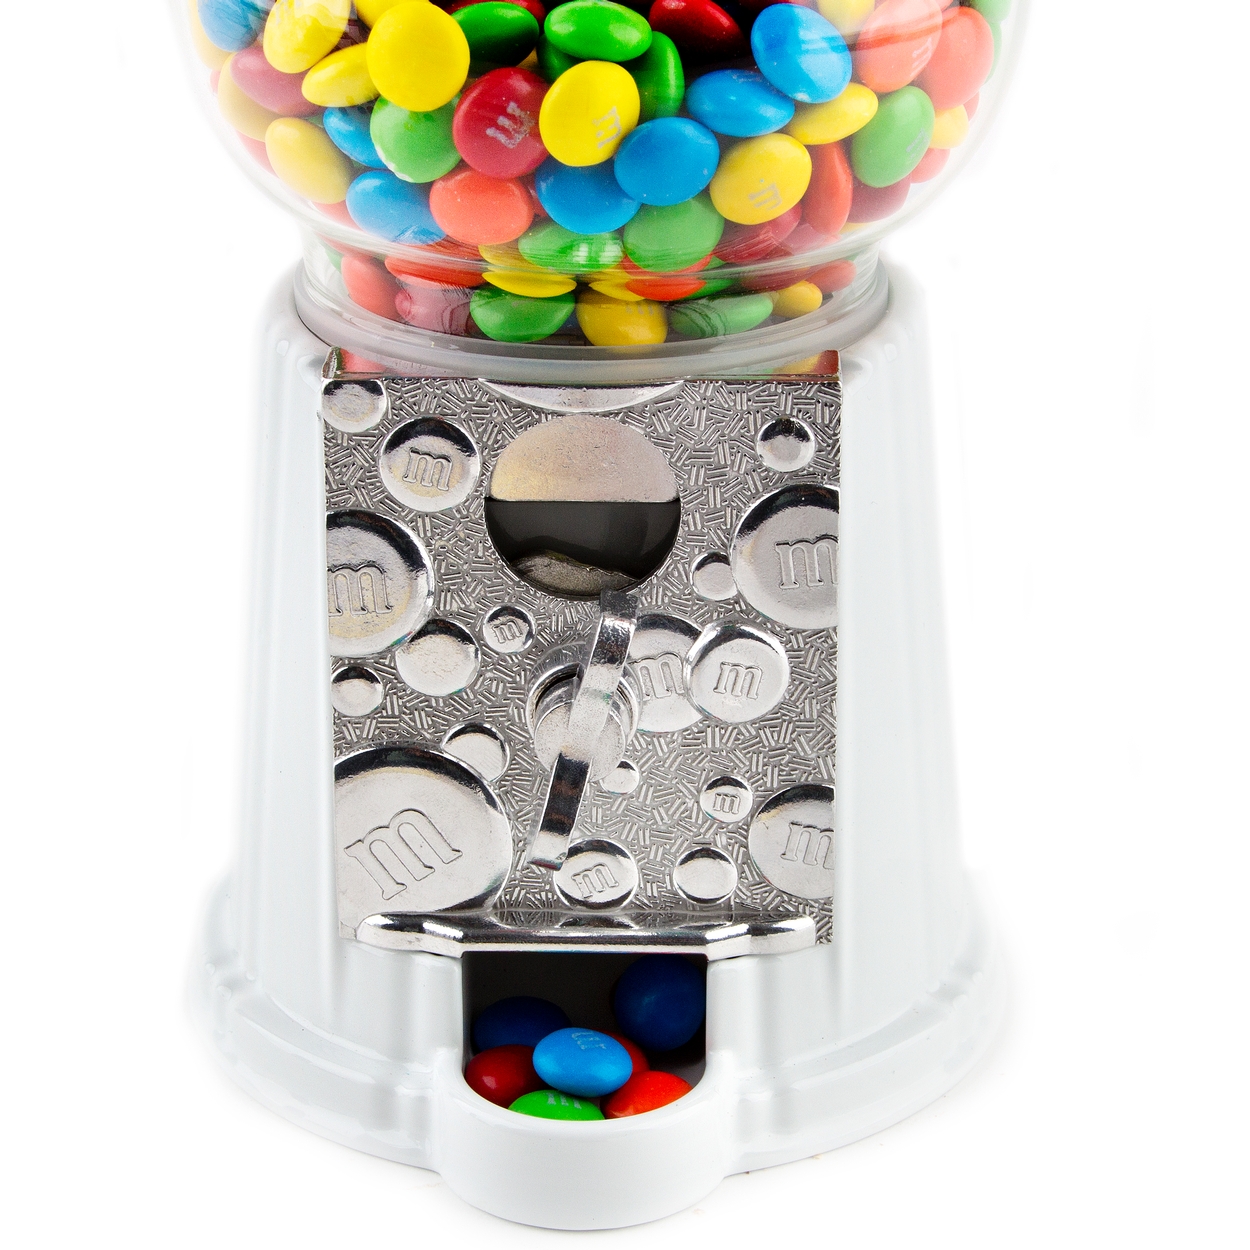 m m candy dispenser machine slot